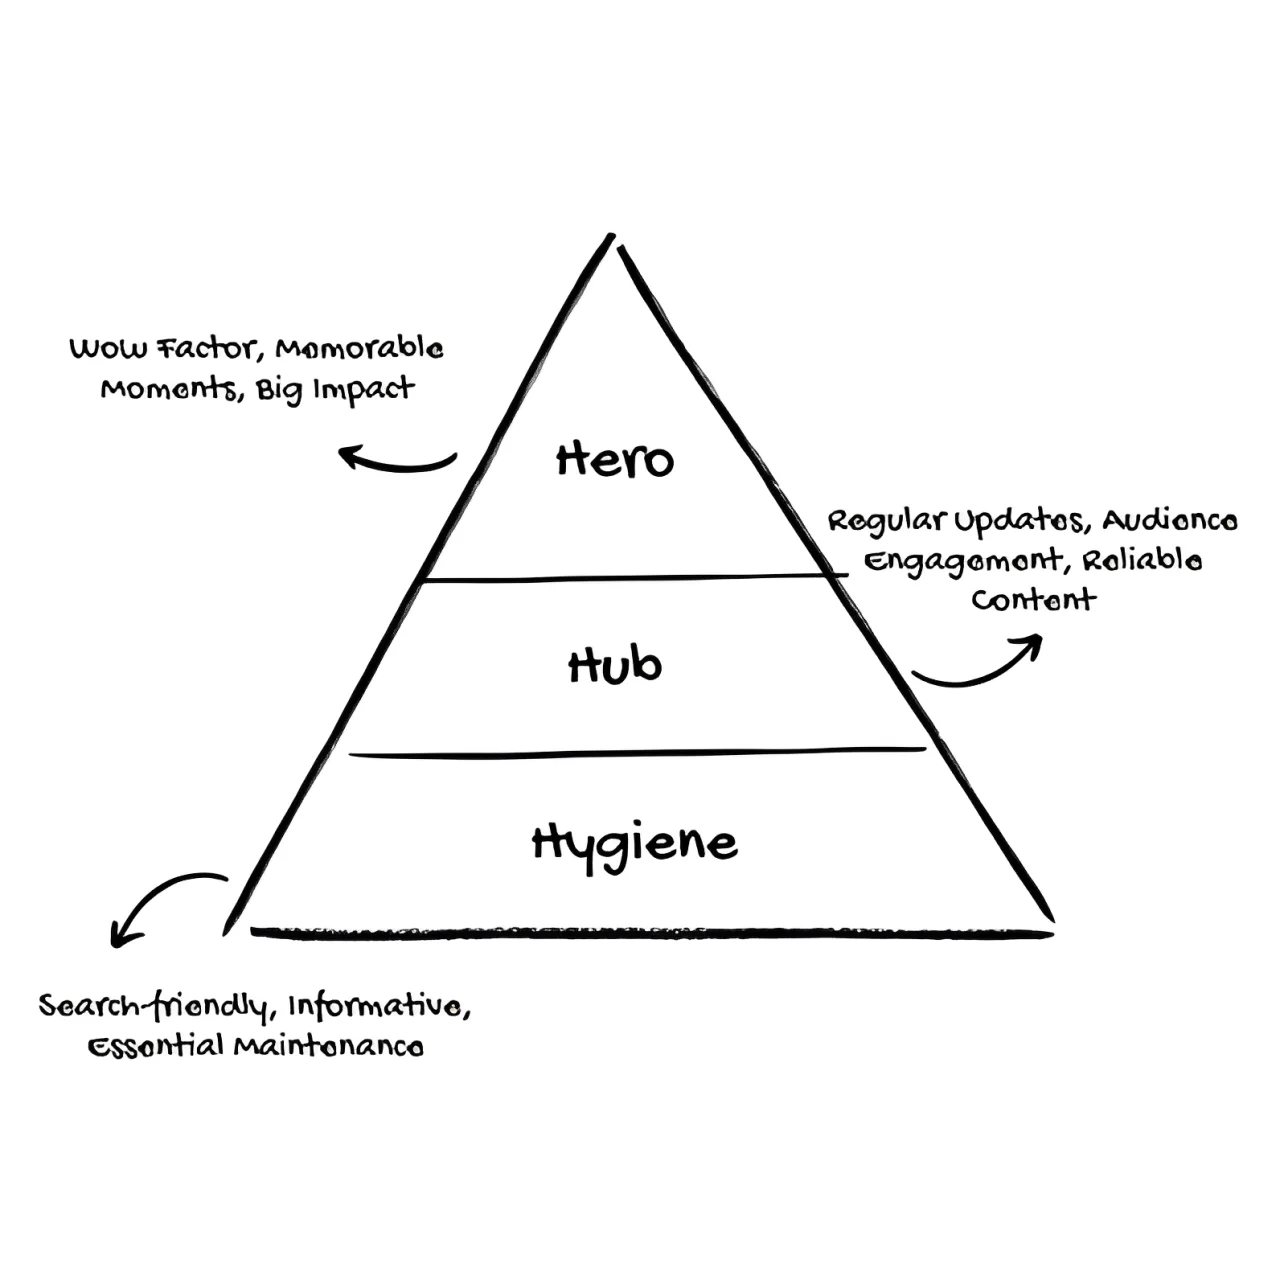 Hero Hub Hygiene